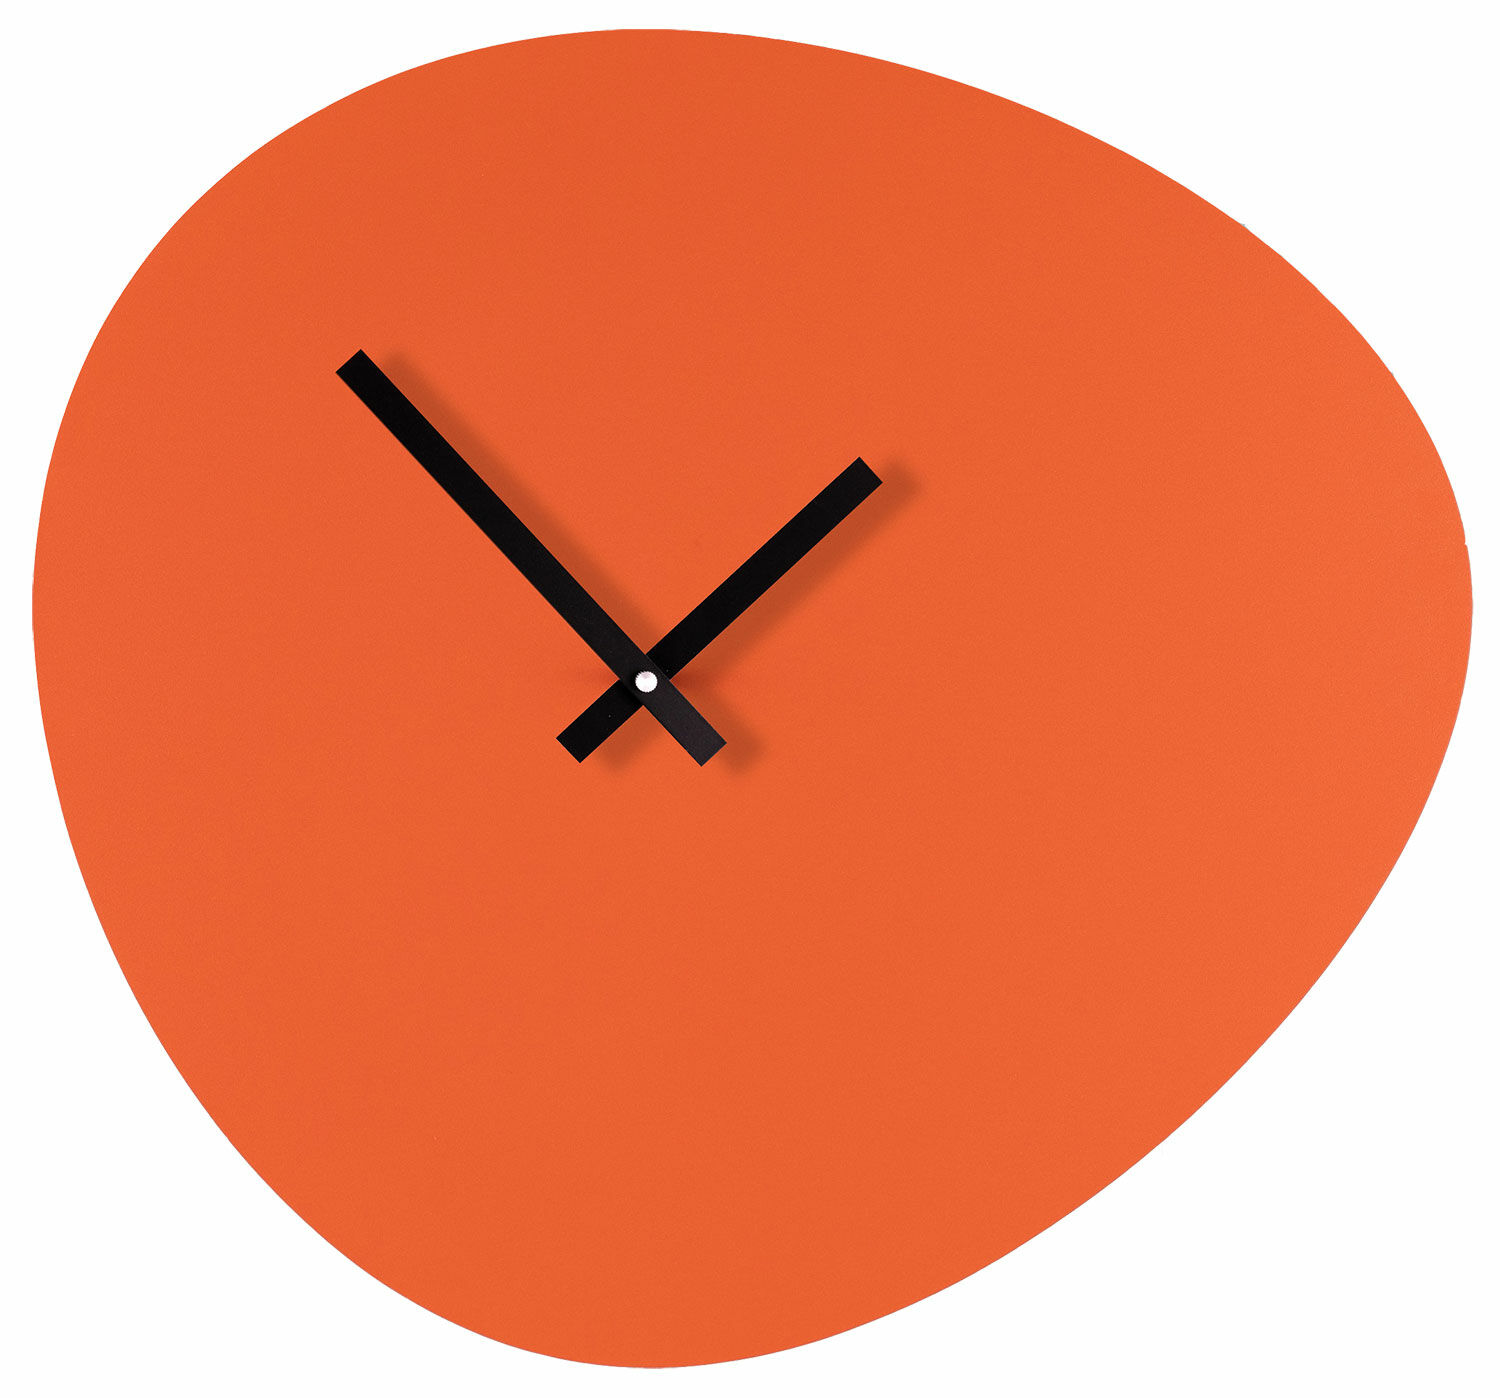 Wall clock "Pebble", orange version by KLOQ